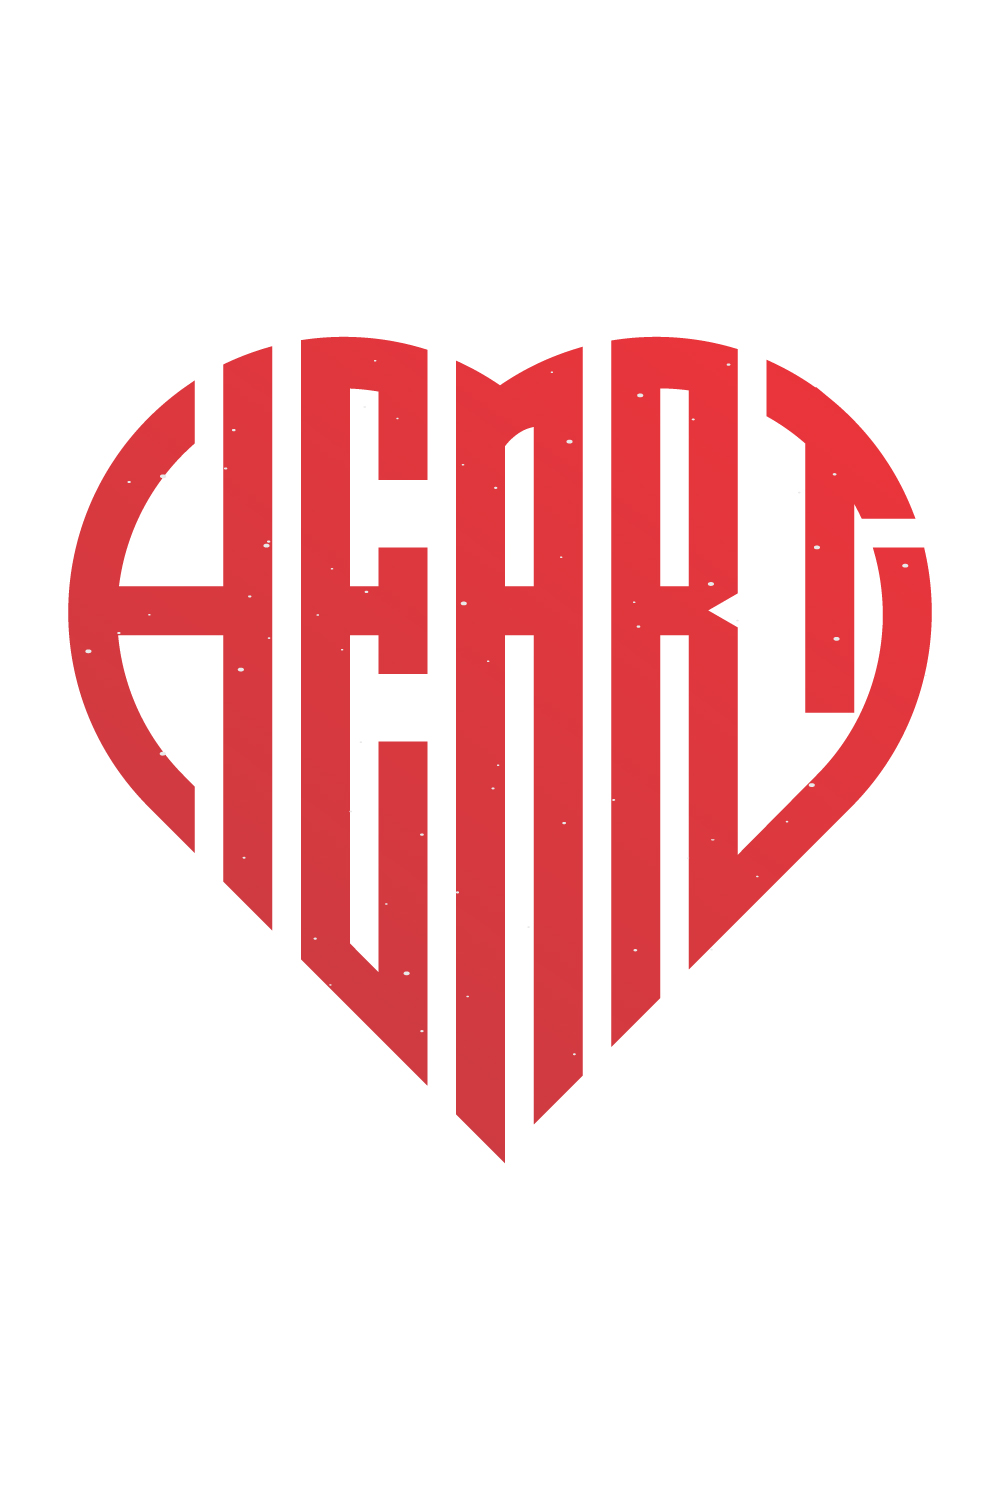 HEART logo design pinterest preview image.